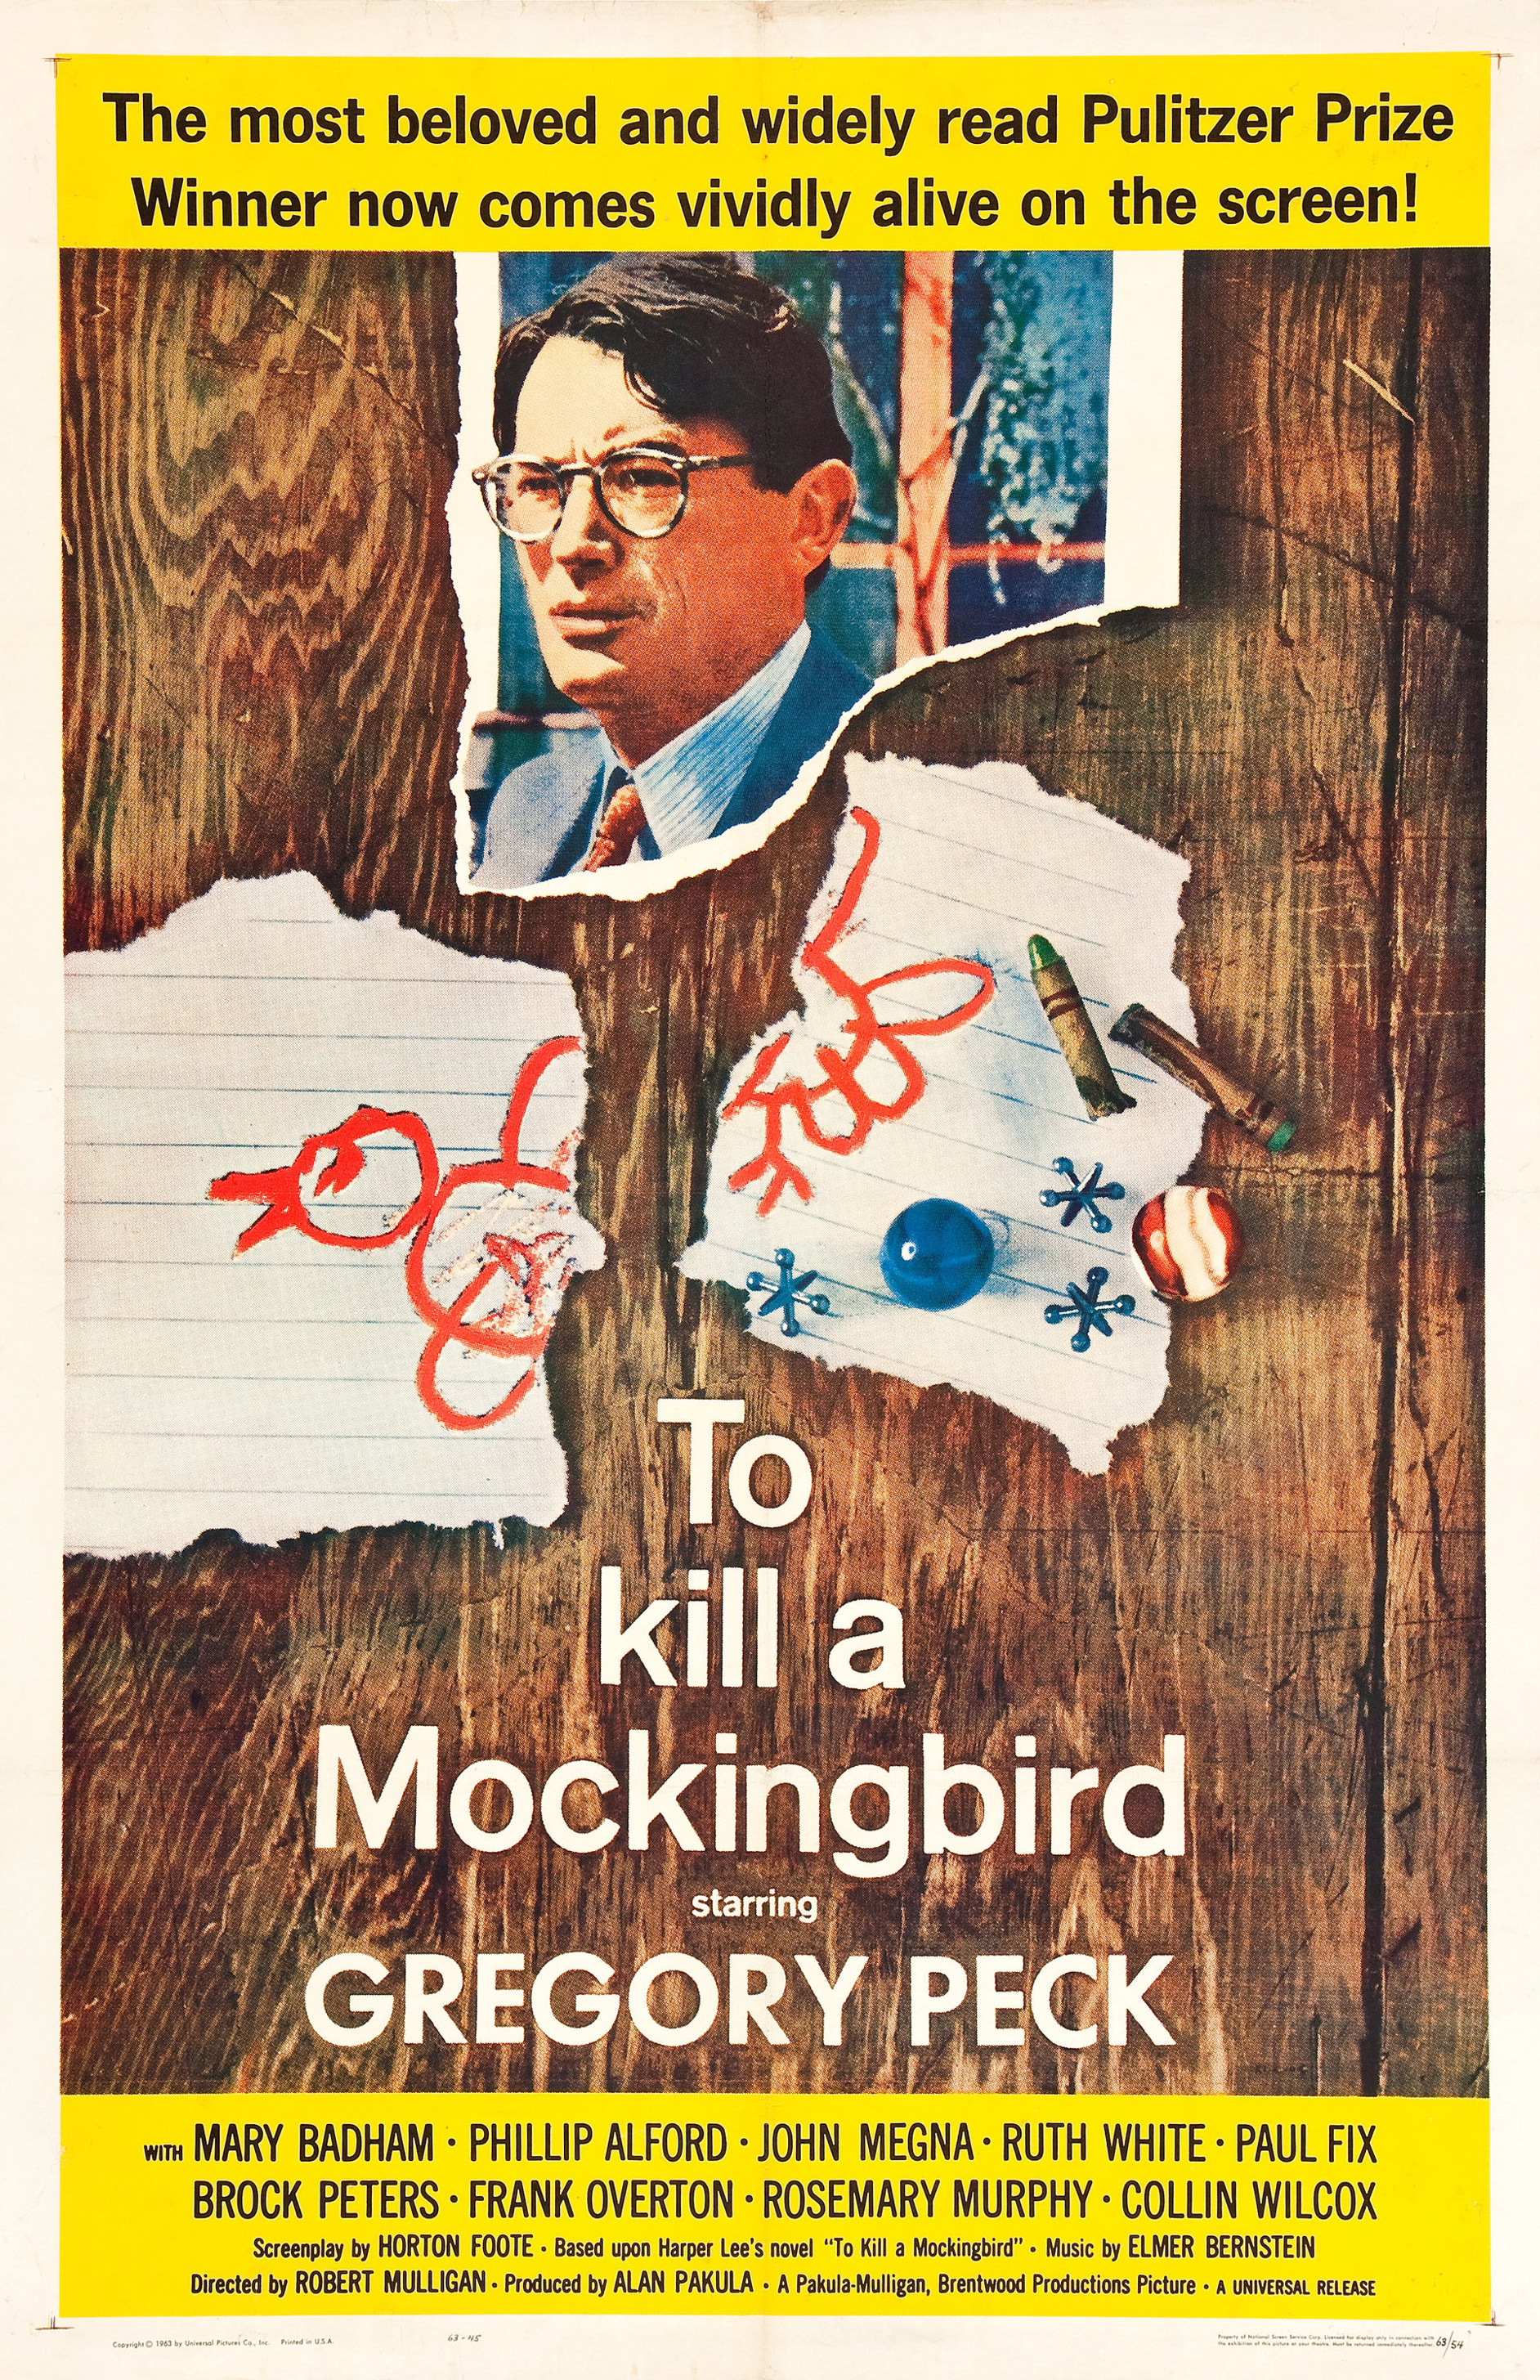 childhood innocence in to kill a mockingbird